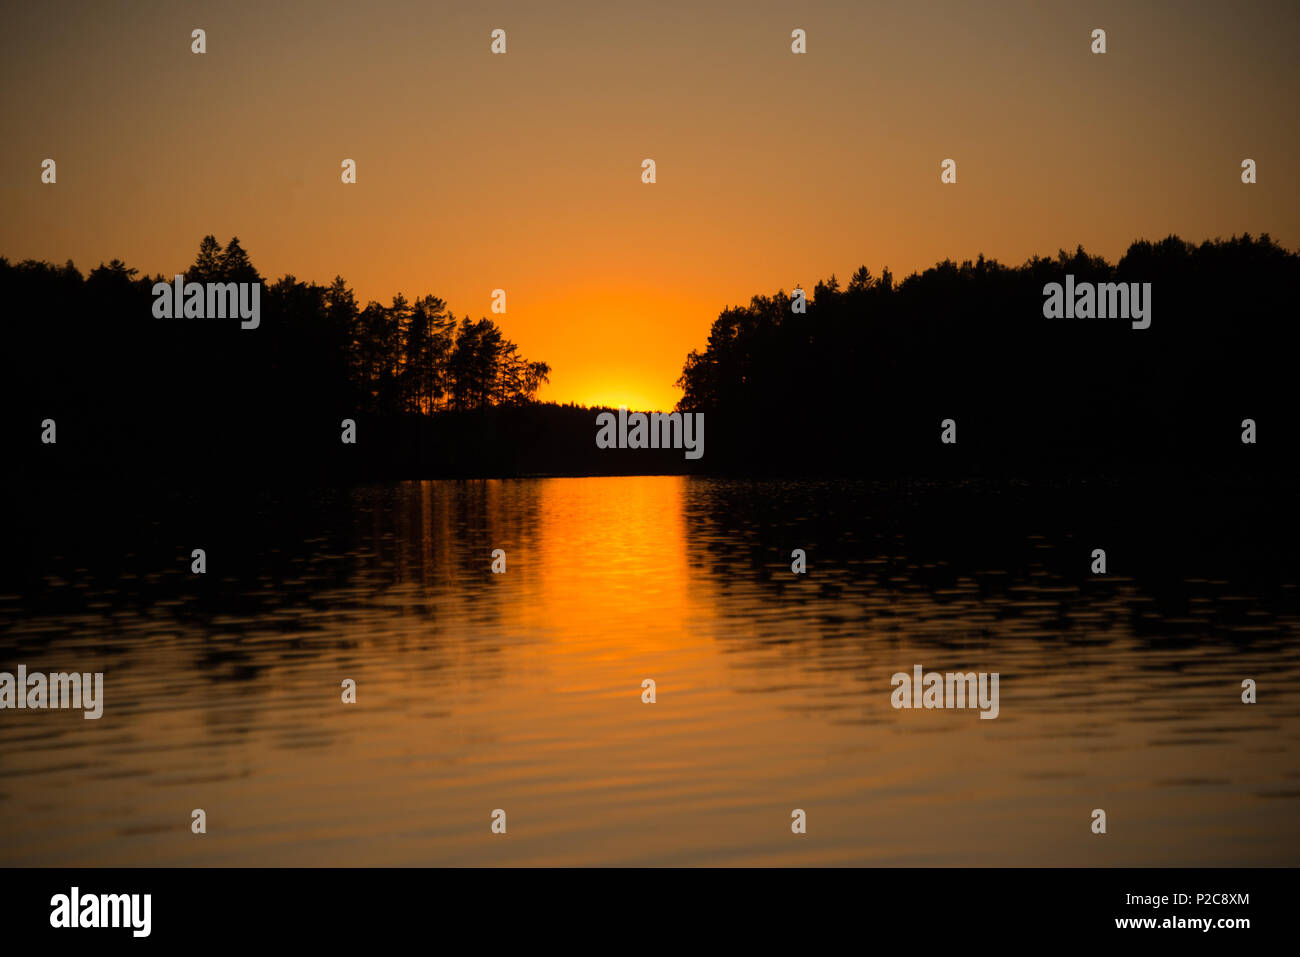 The moment after the sunset. Lake Kukkia, Luopioinen, Finland. Stock Photo